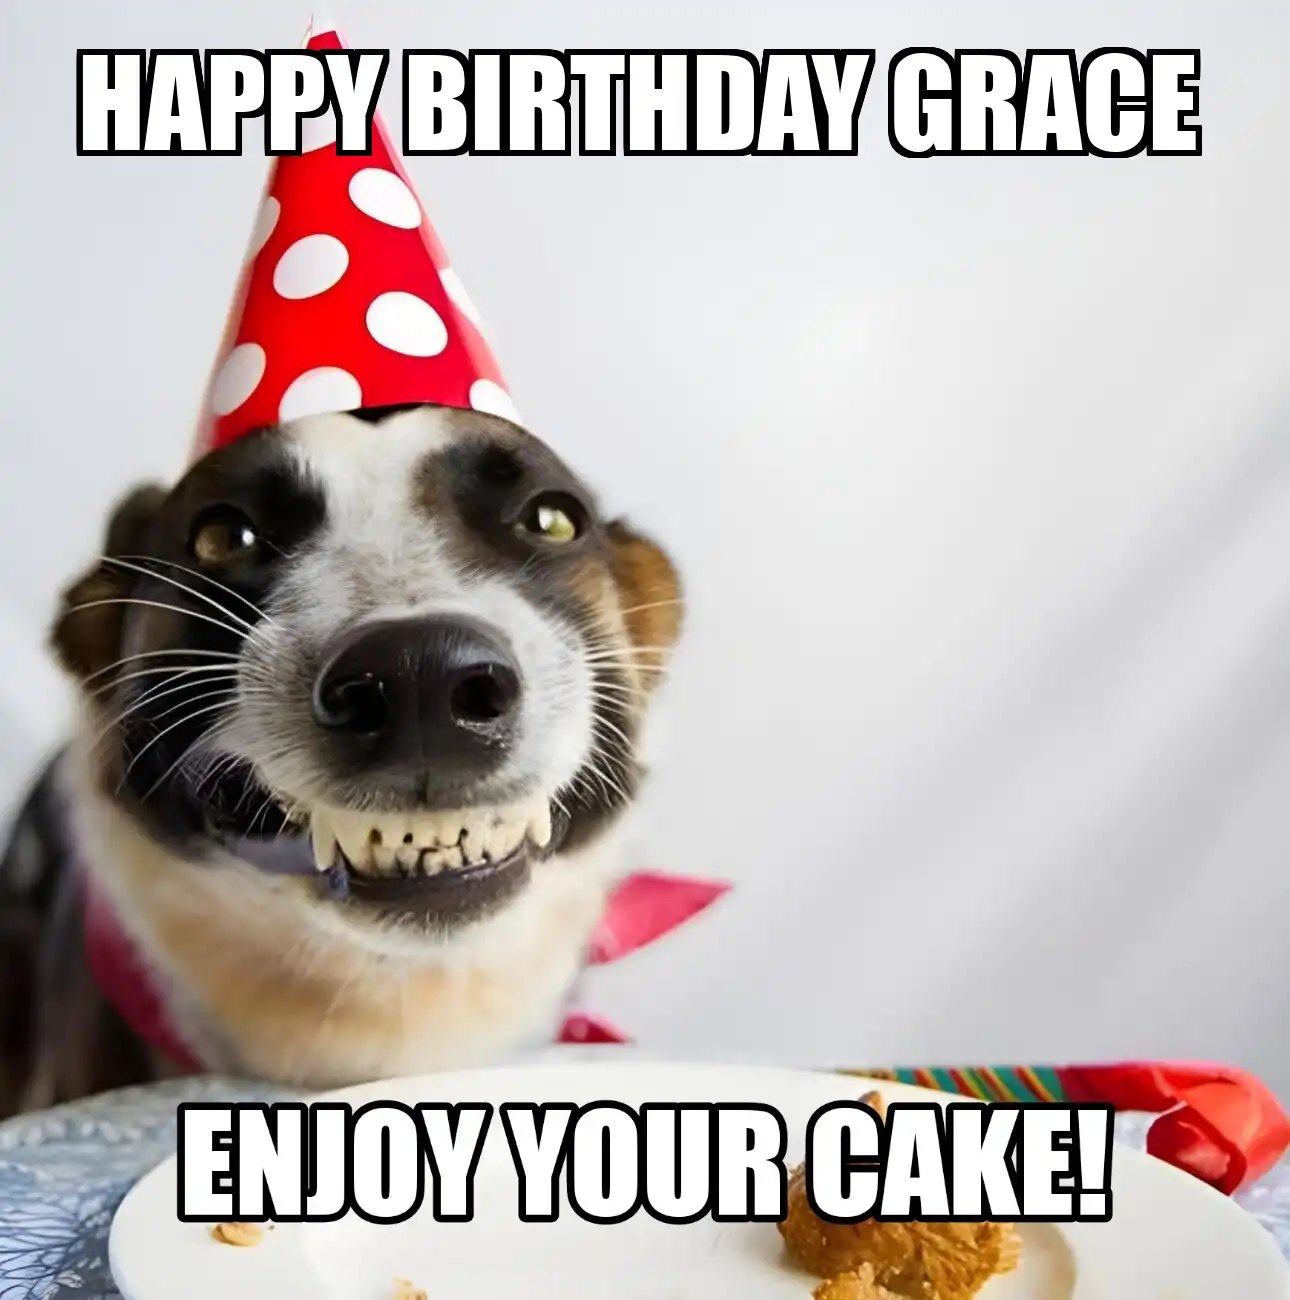 Happy Birthday Grace Enjoy Your Cake Dog Meme